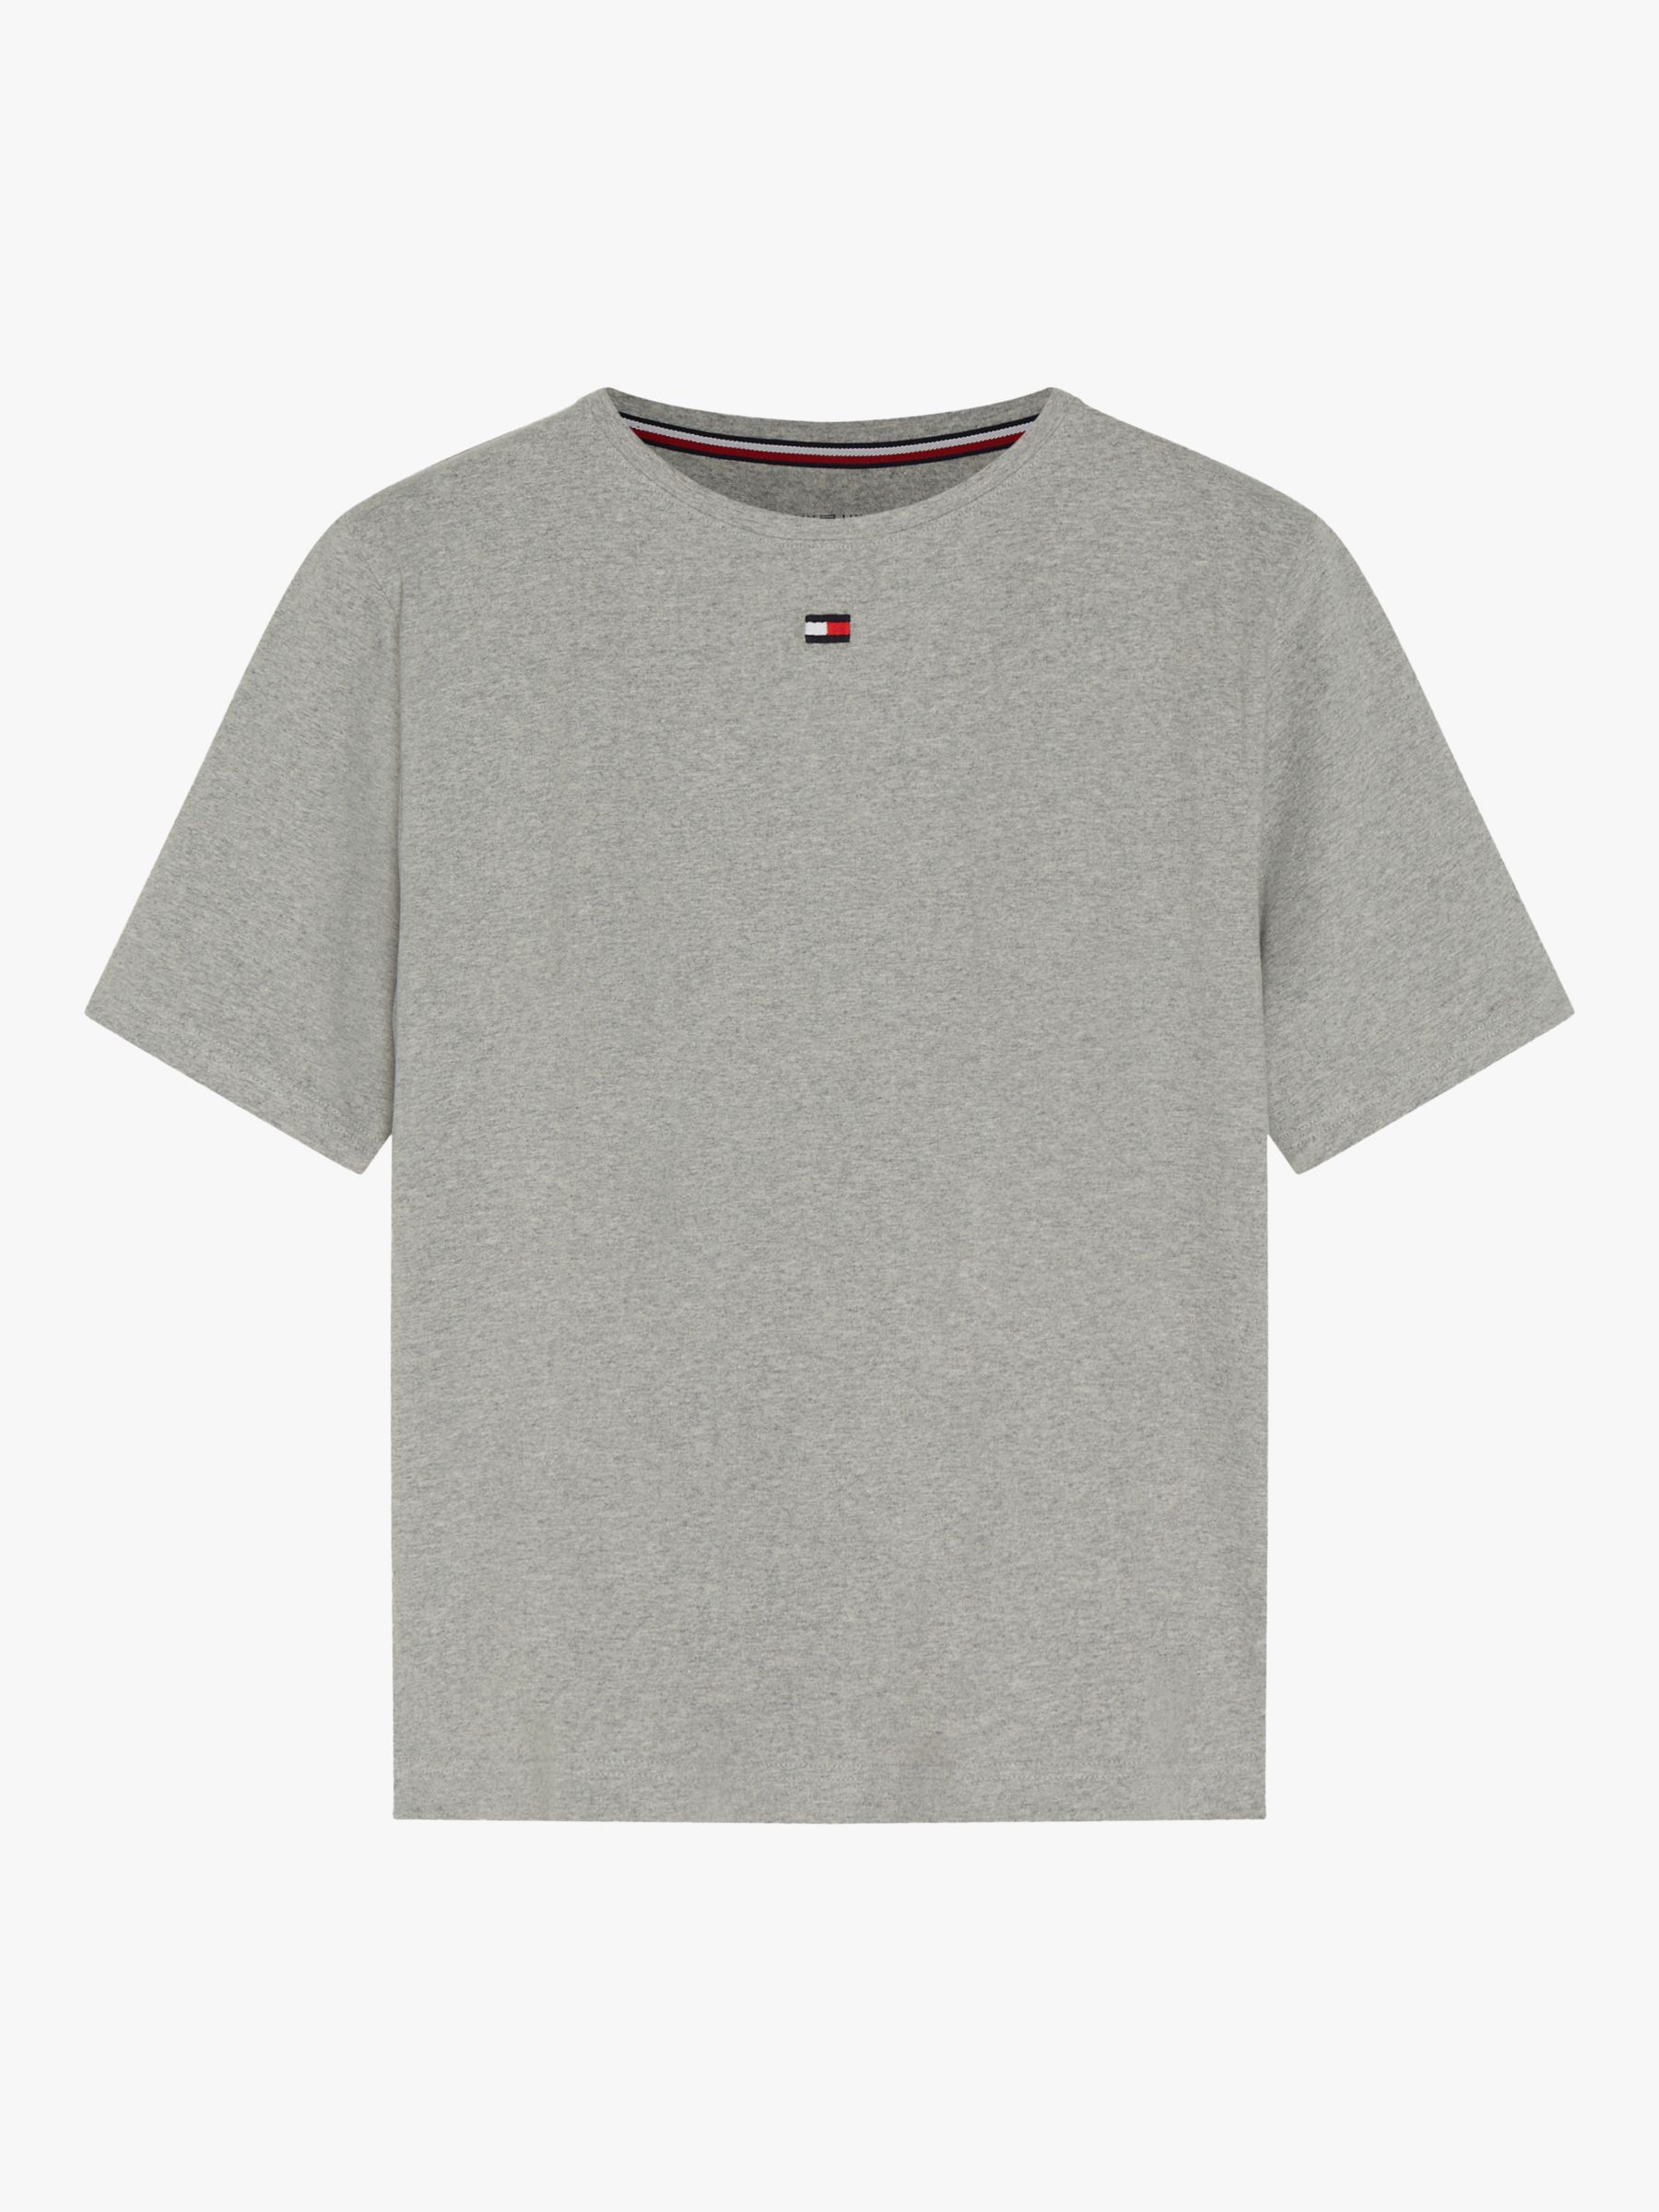 Tommy Hilfiger Logo T-Shirt, Grey Heather at John Lewis & Partners